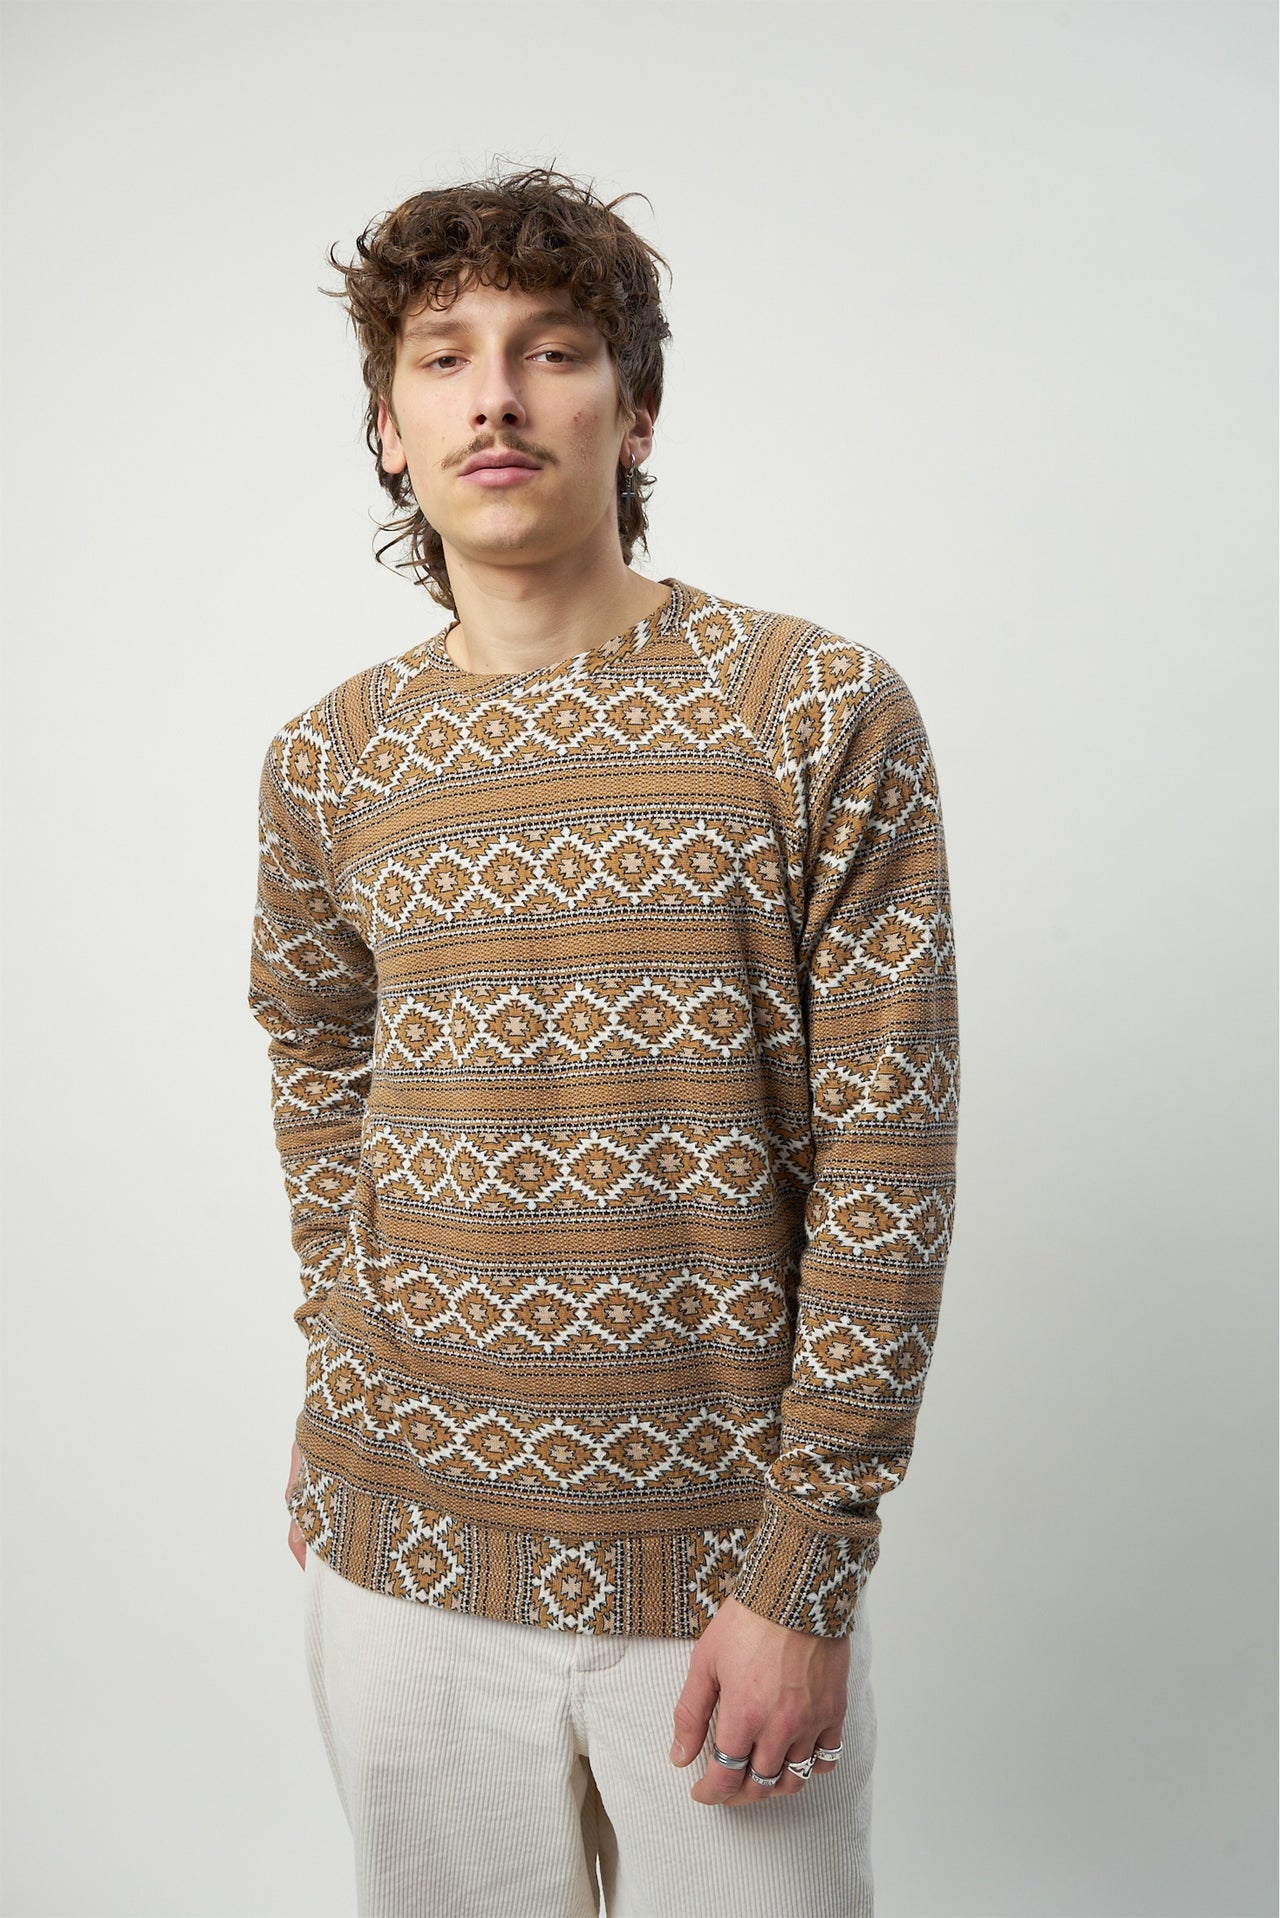 Long Sleeve Sweatshirt in a Japanese Cotton Knit